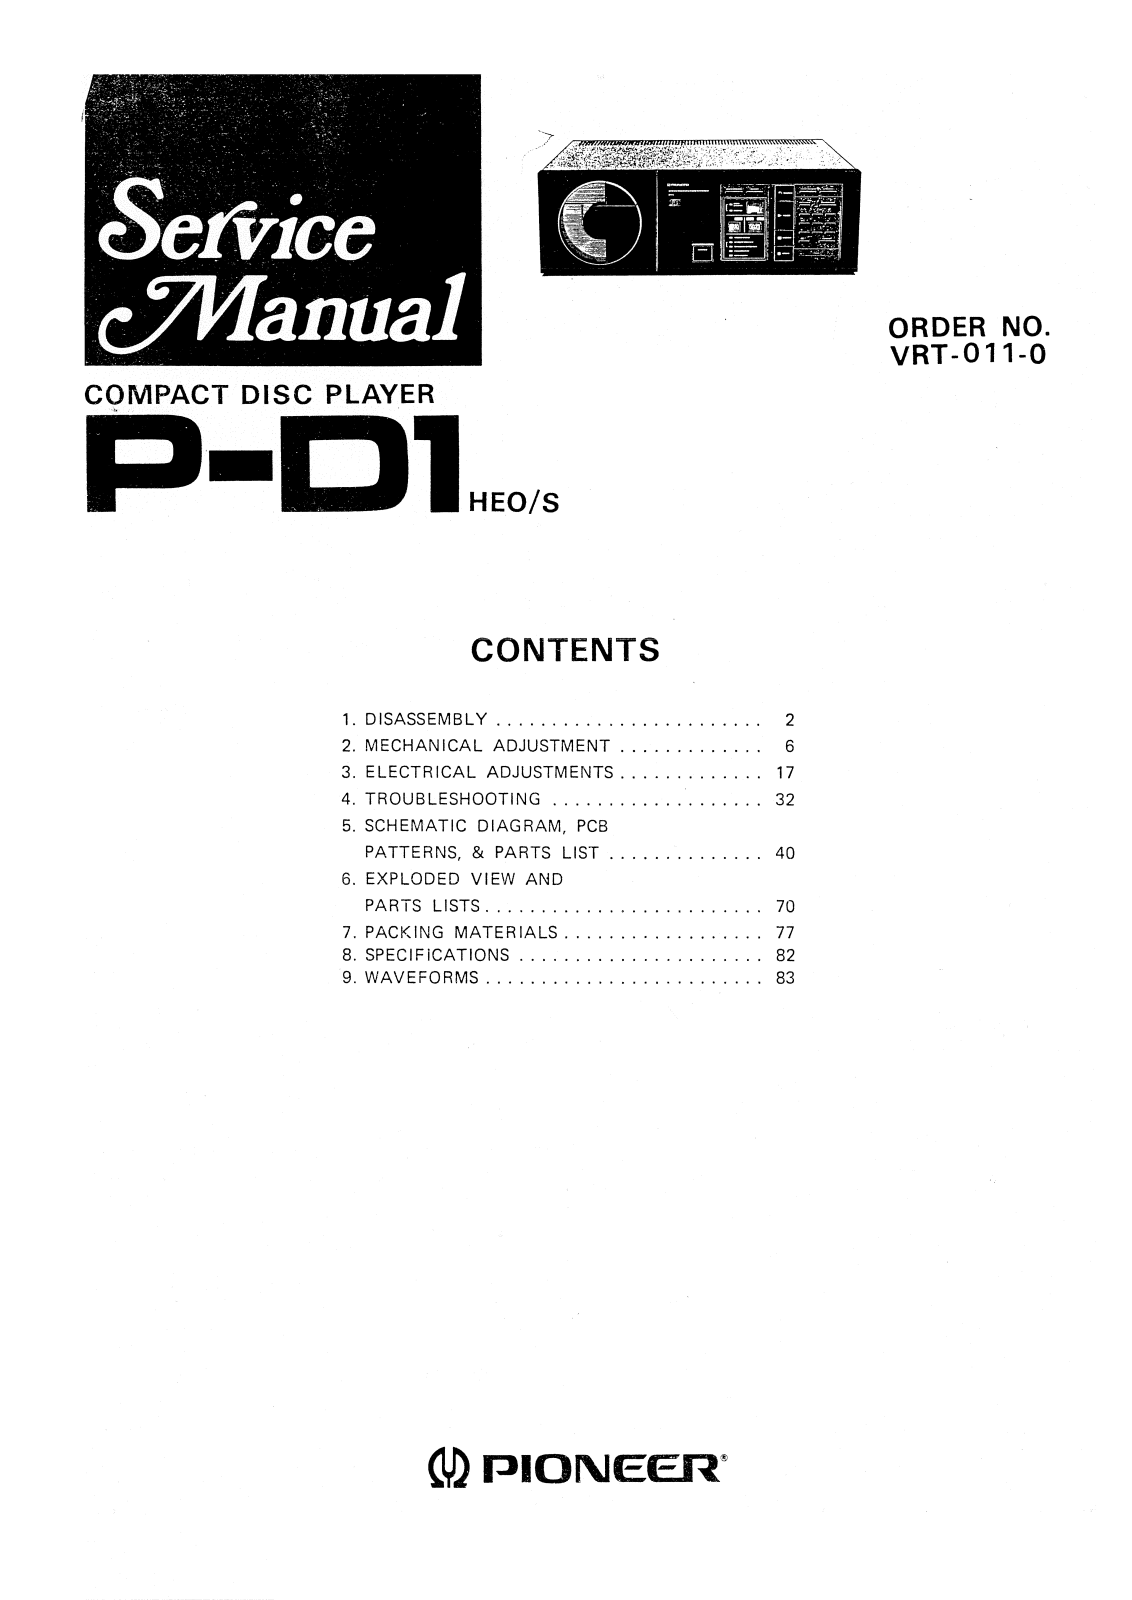 Pioneer p-d1 service manual